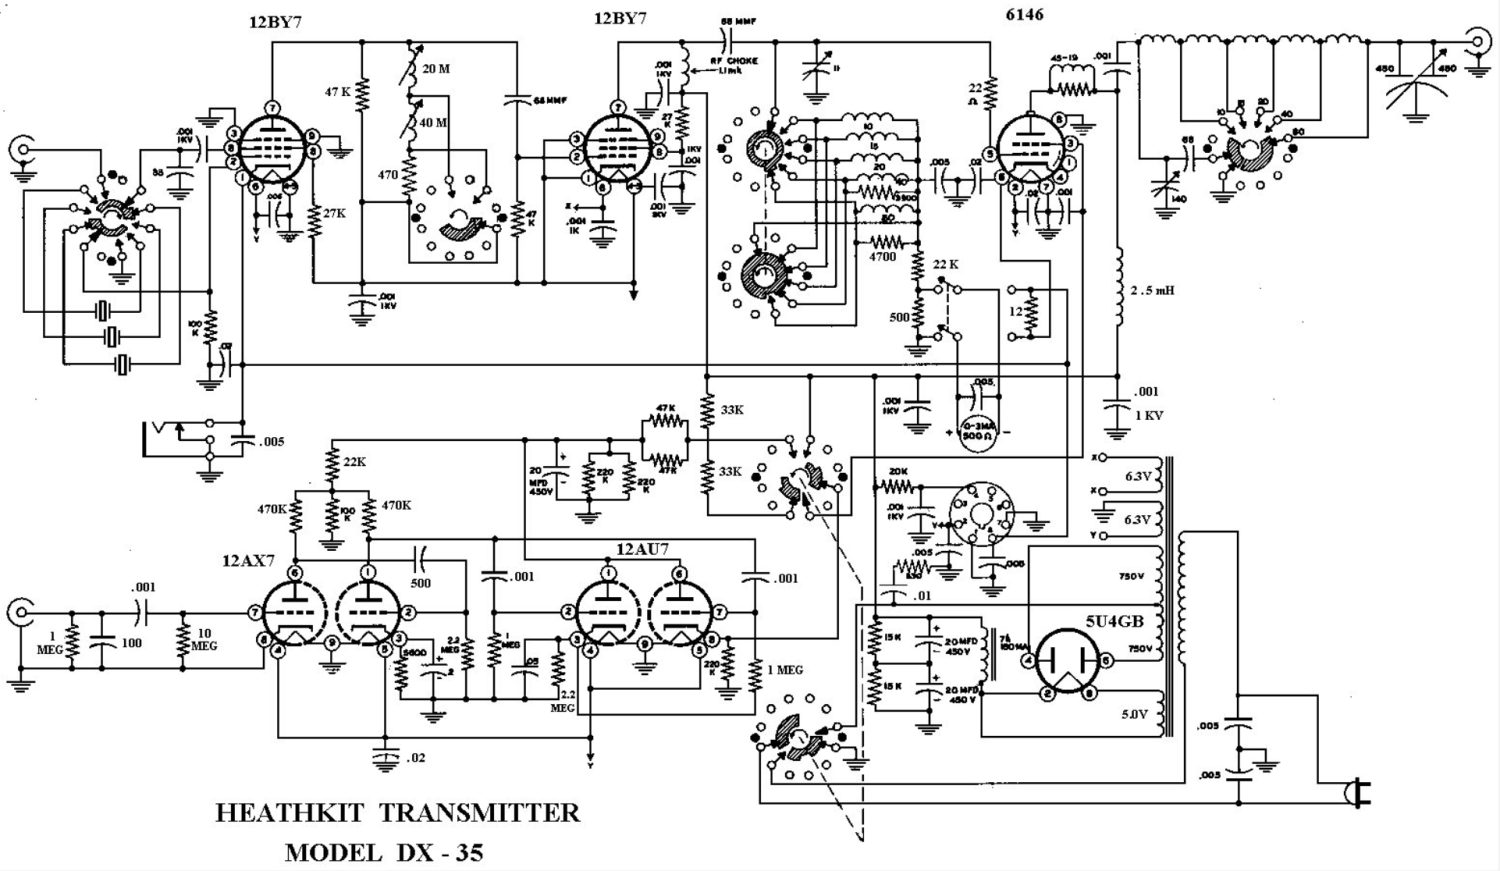 Heathkit DX-35 Amateur Transmitter - Schematic Diagram